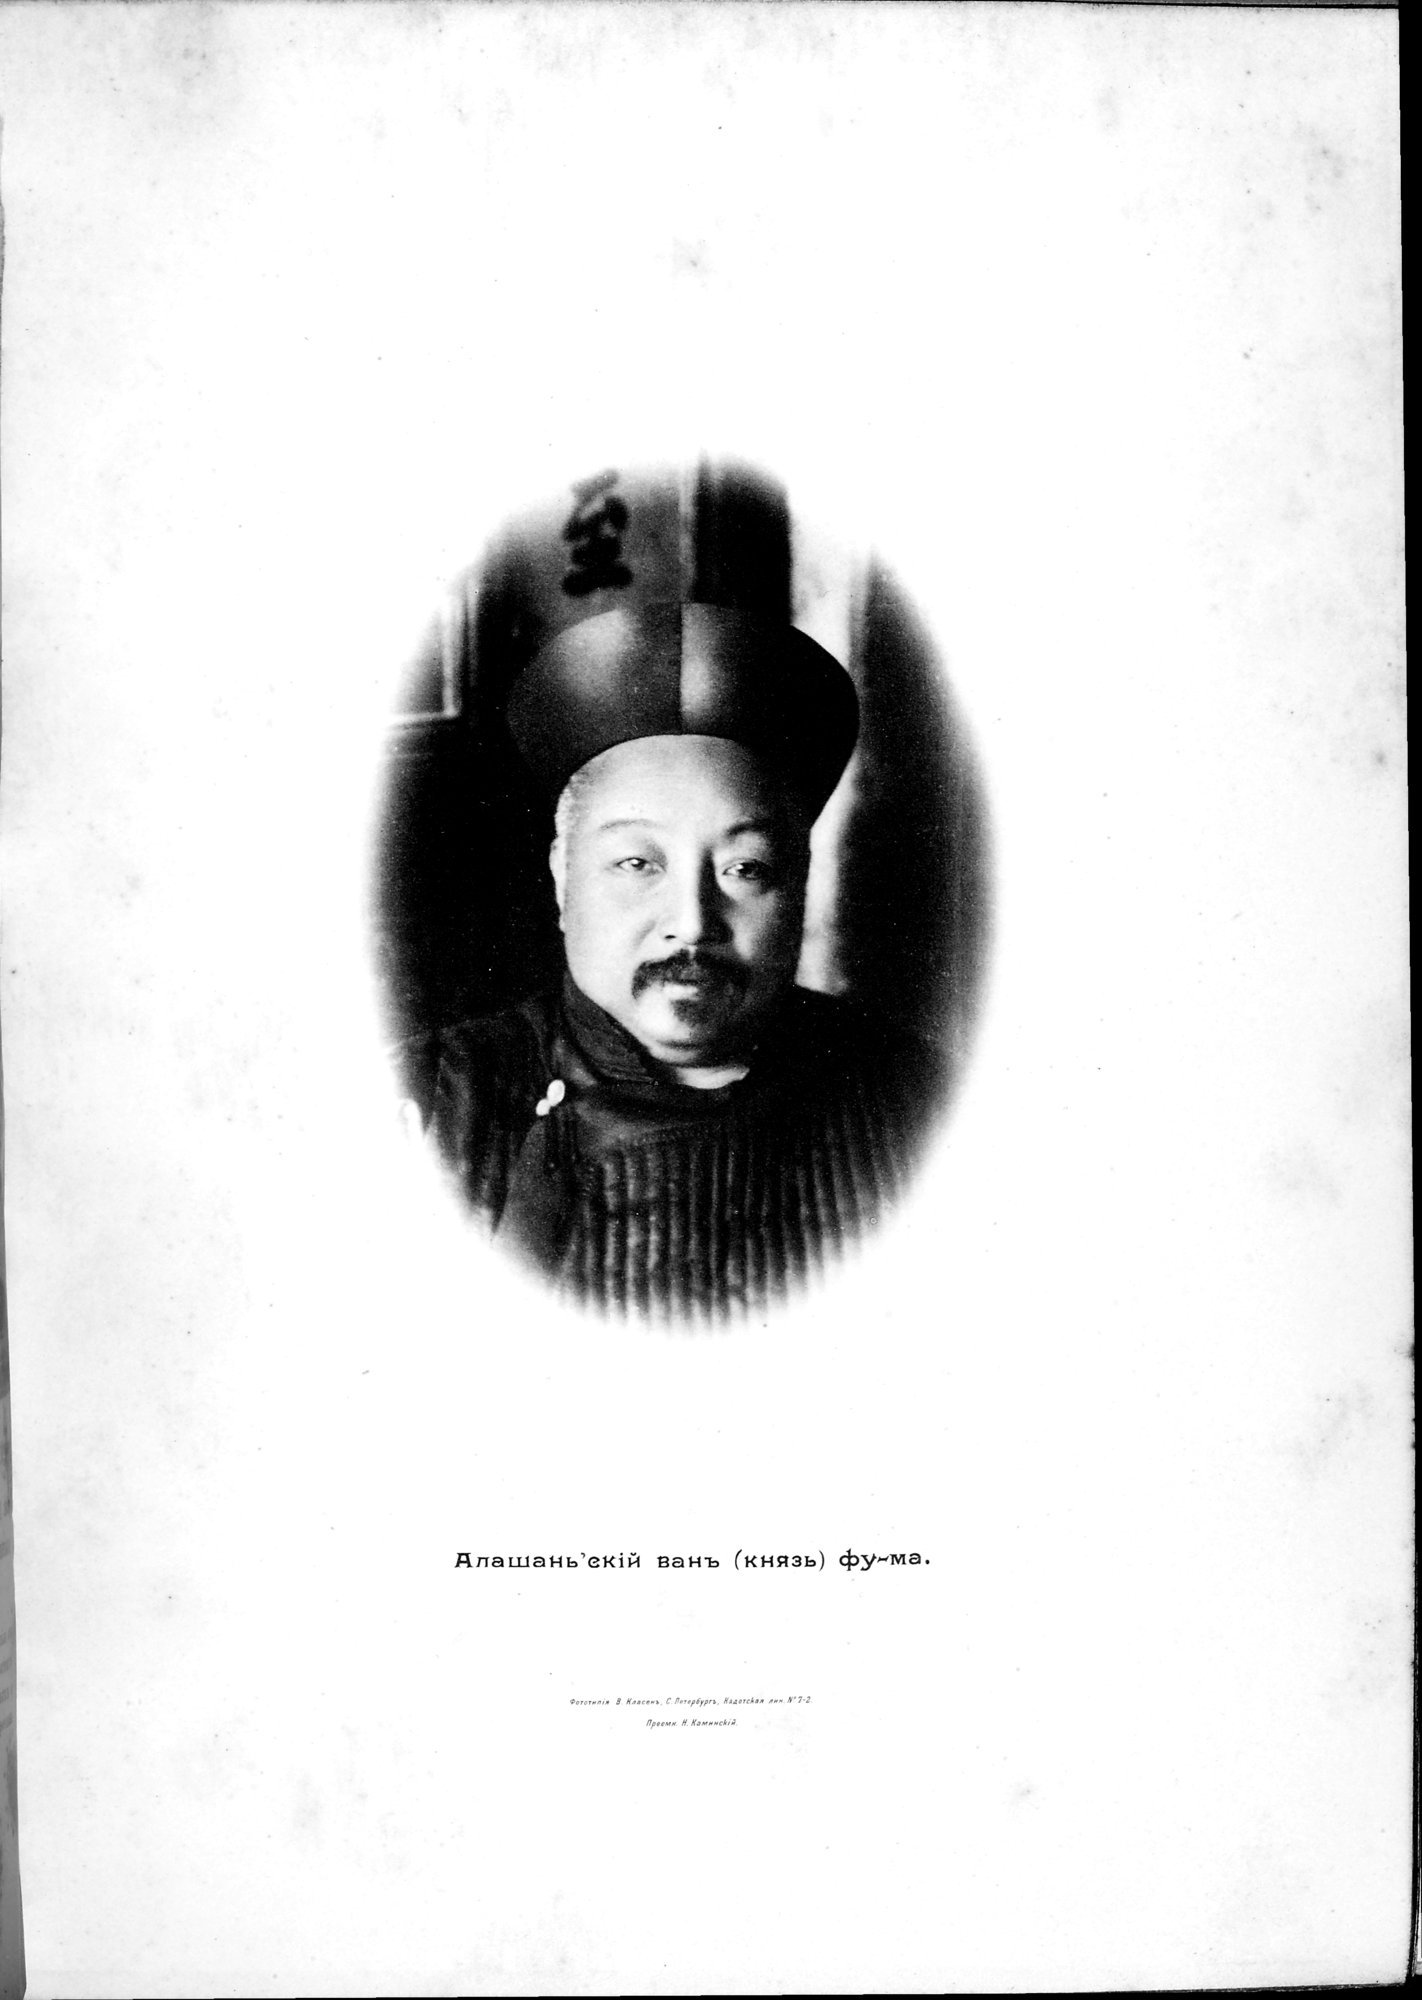 Mongoliia i Kam : vol.2 / Page 523 (Grayscale High Resolution Image)